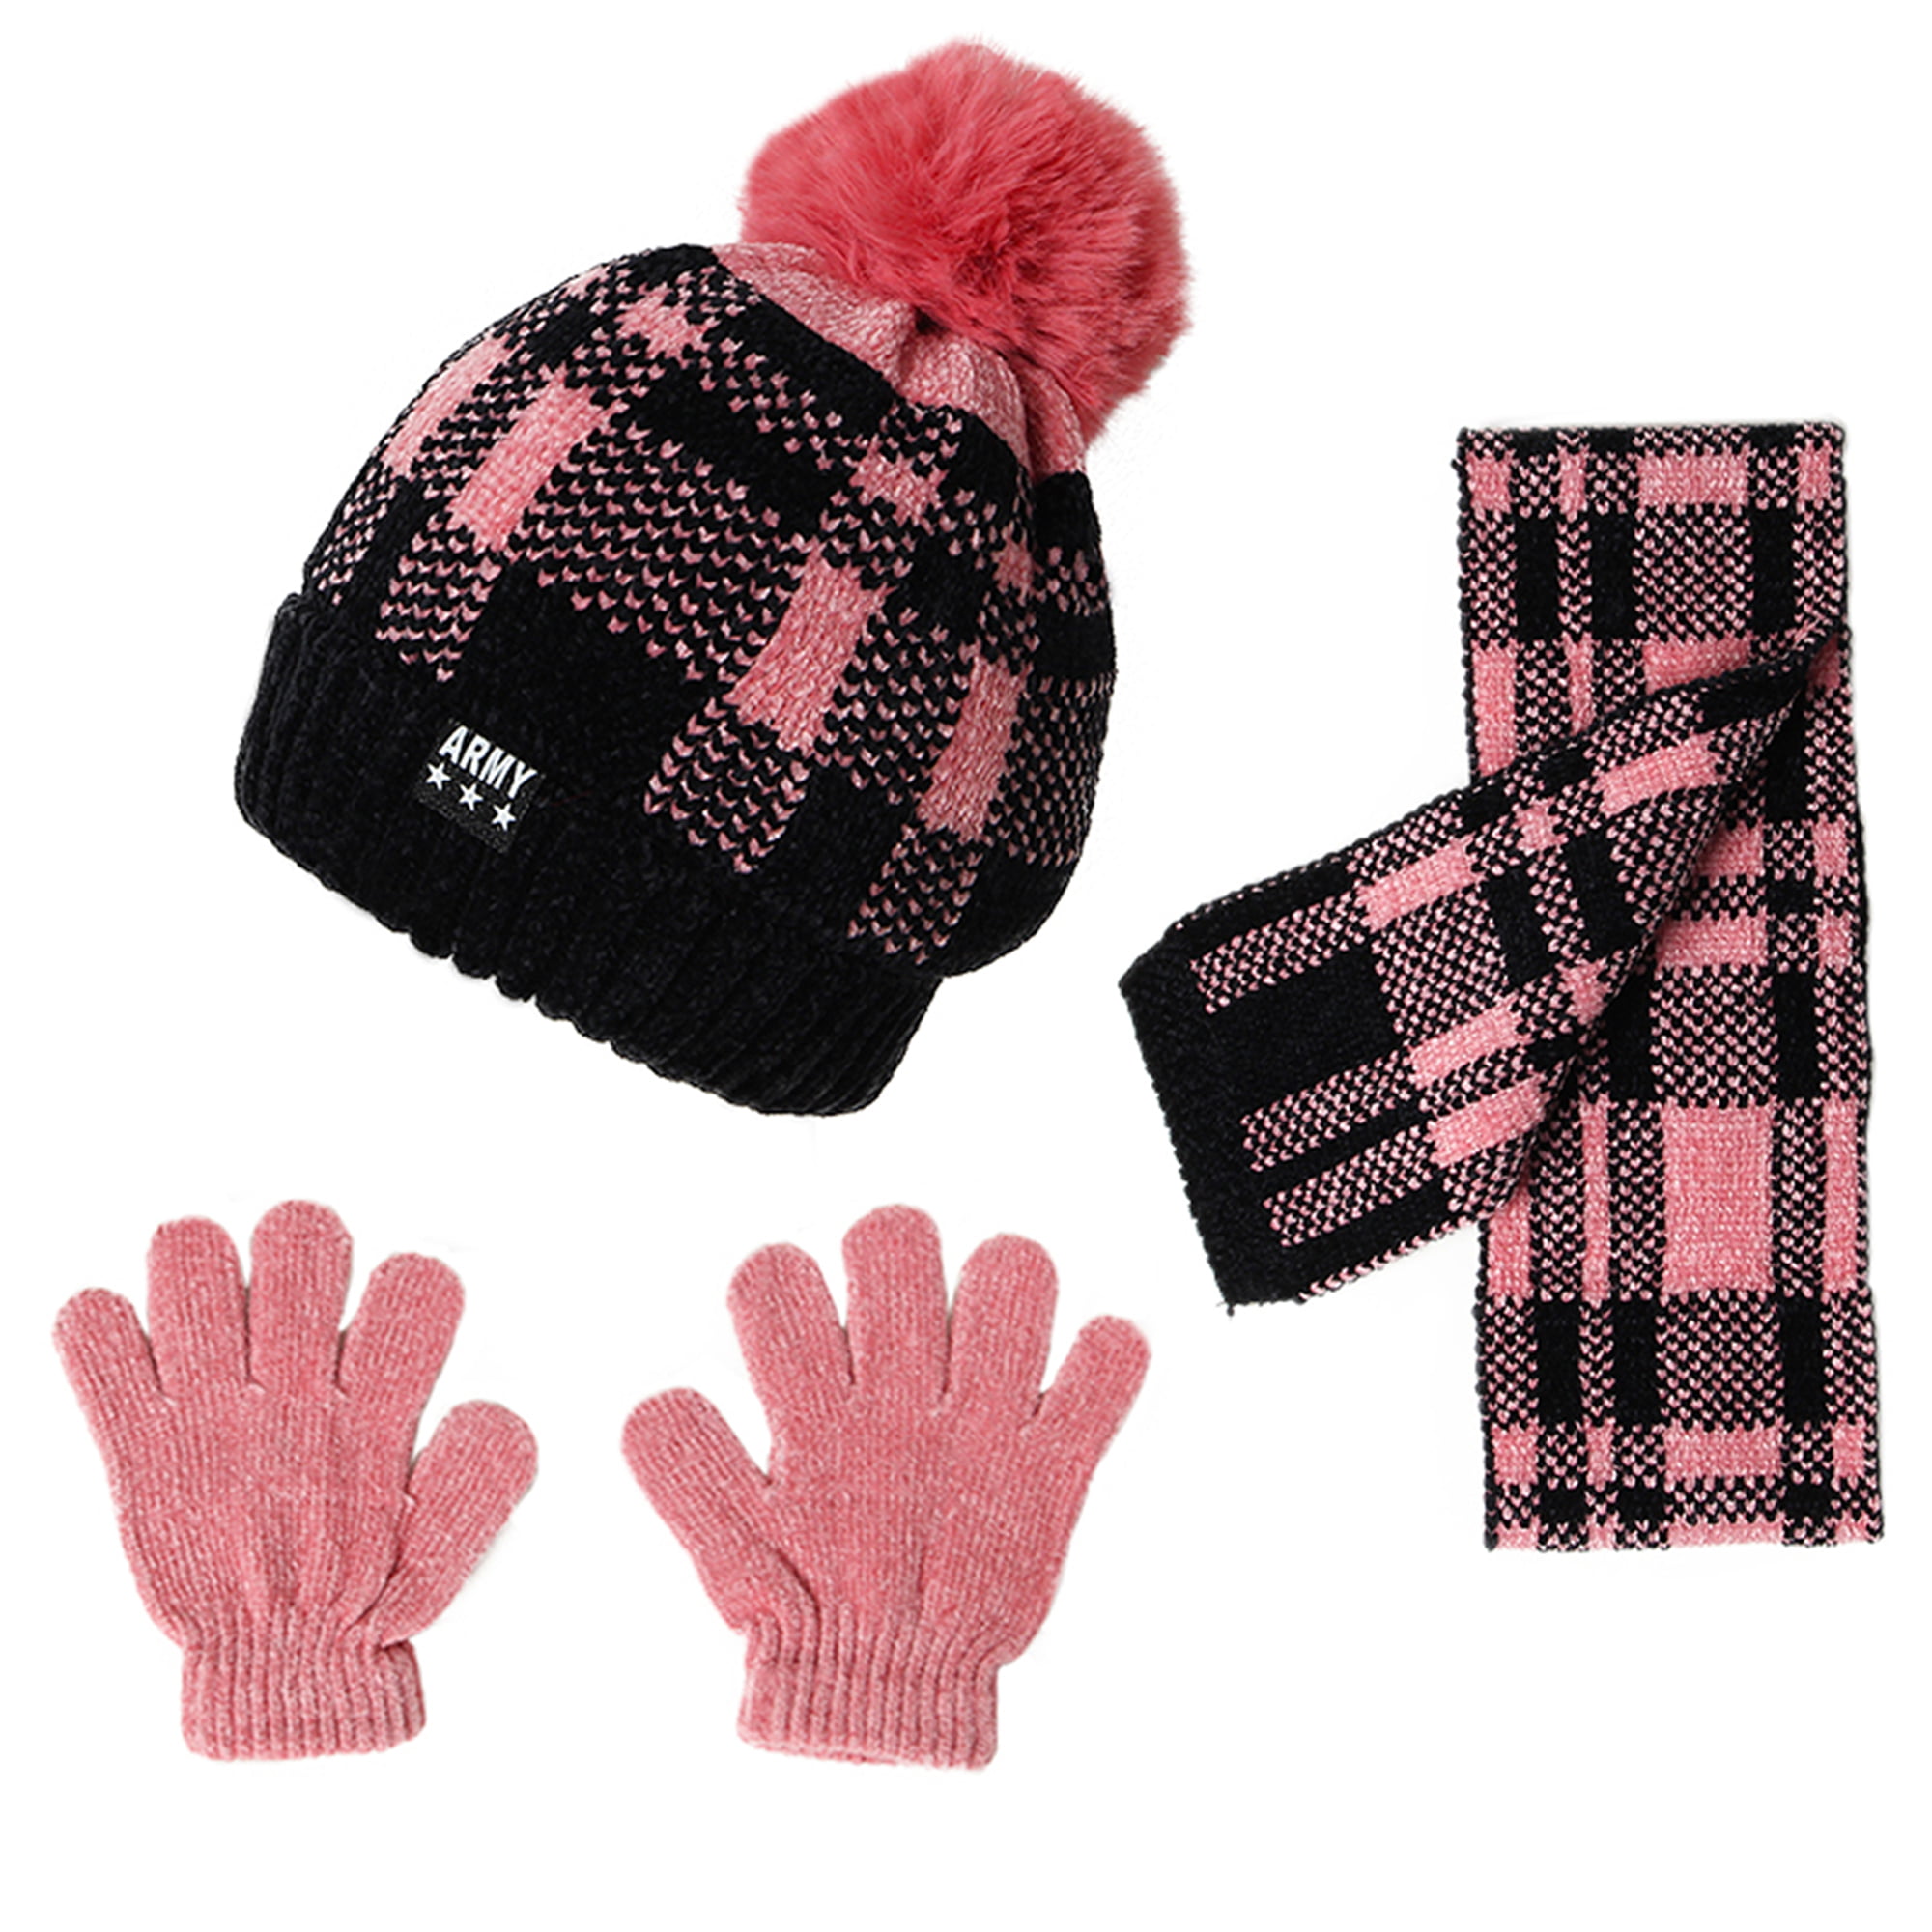 DKNY Boys Winter Beanie Hat and Gloves Set 